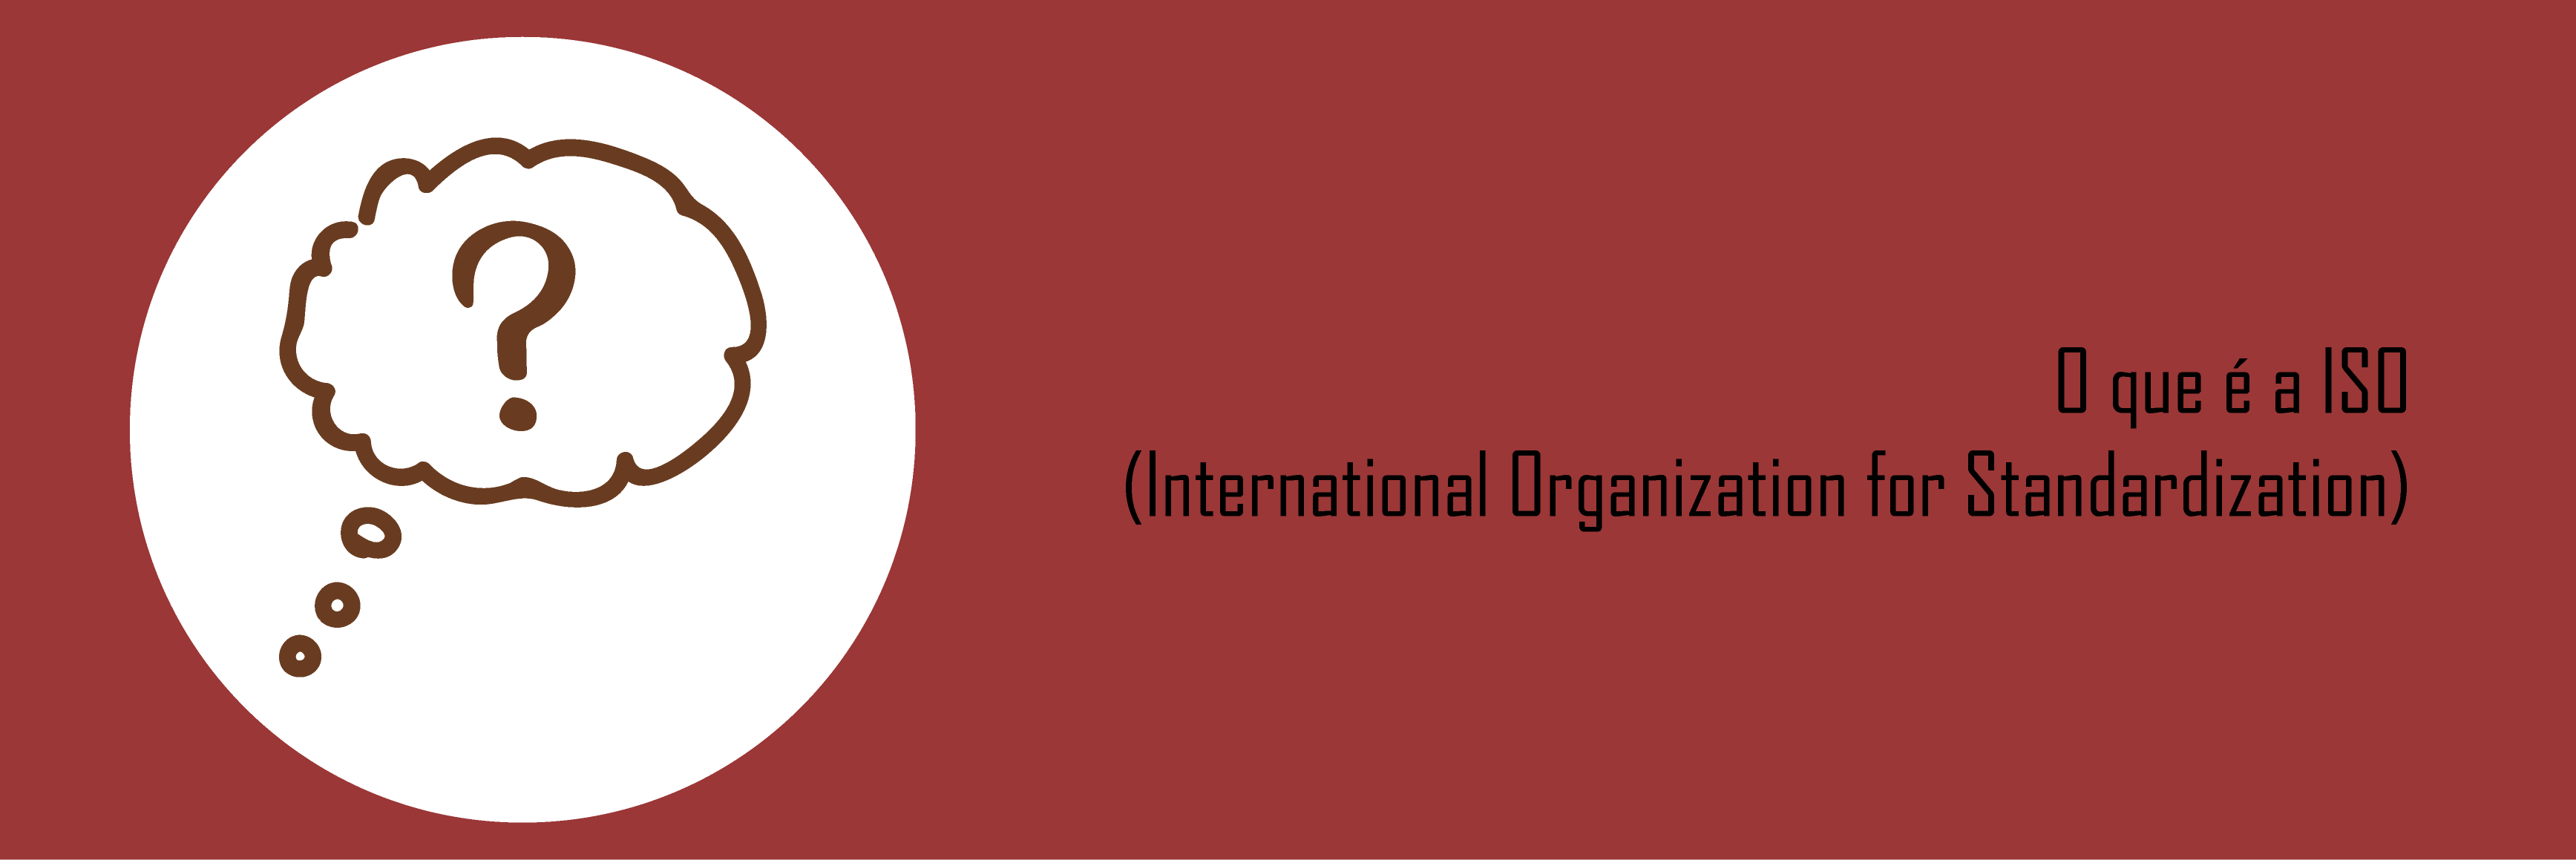 O que é a ISO (International Organization for Standardization)